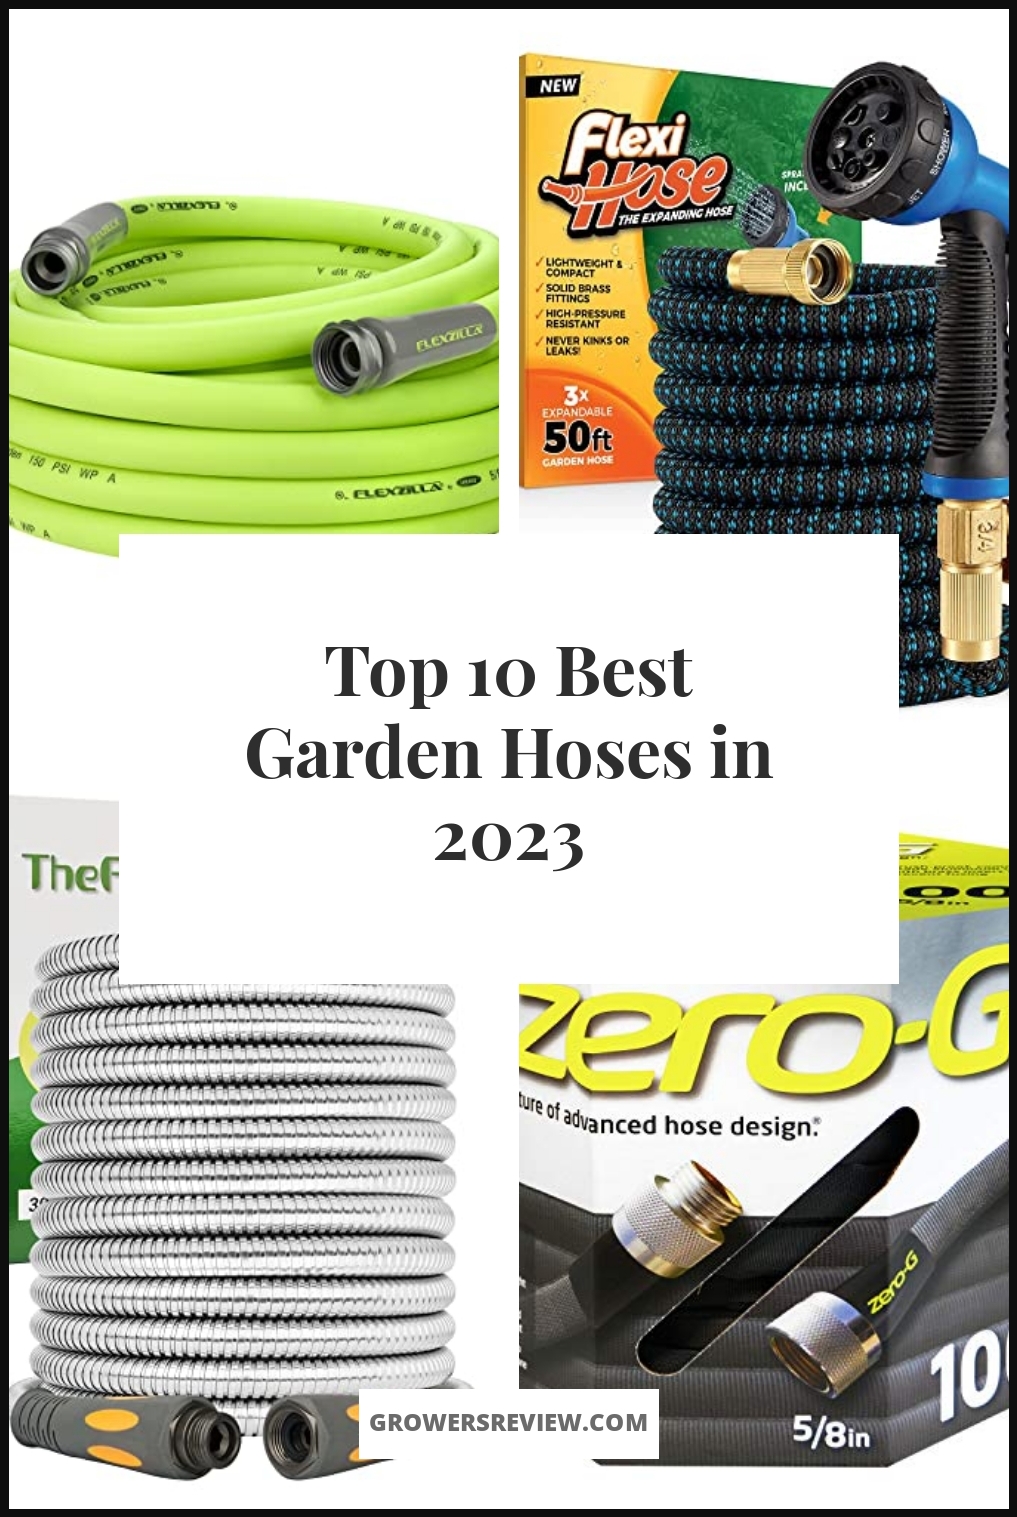 Best Garden Hoses - Buying Guide